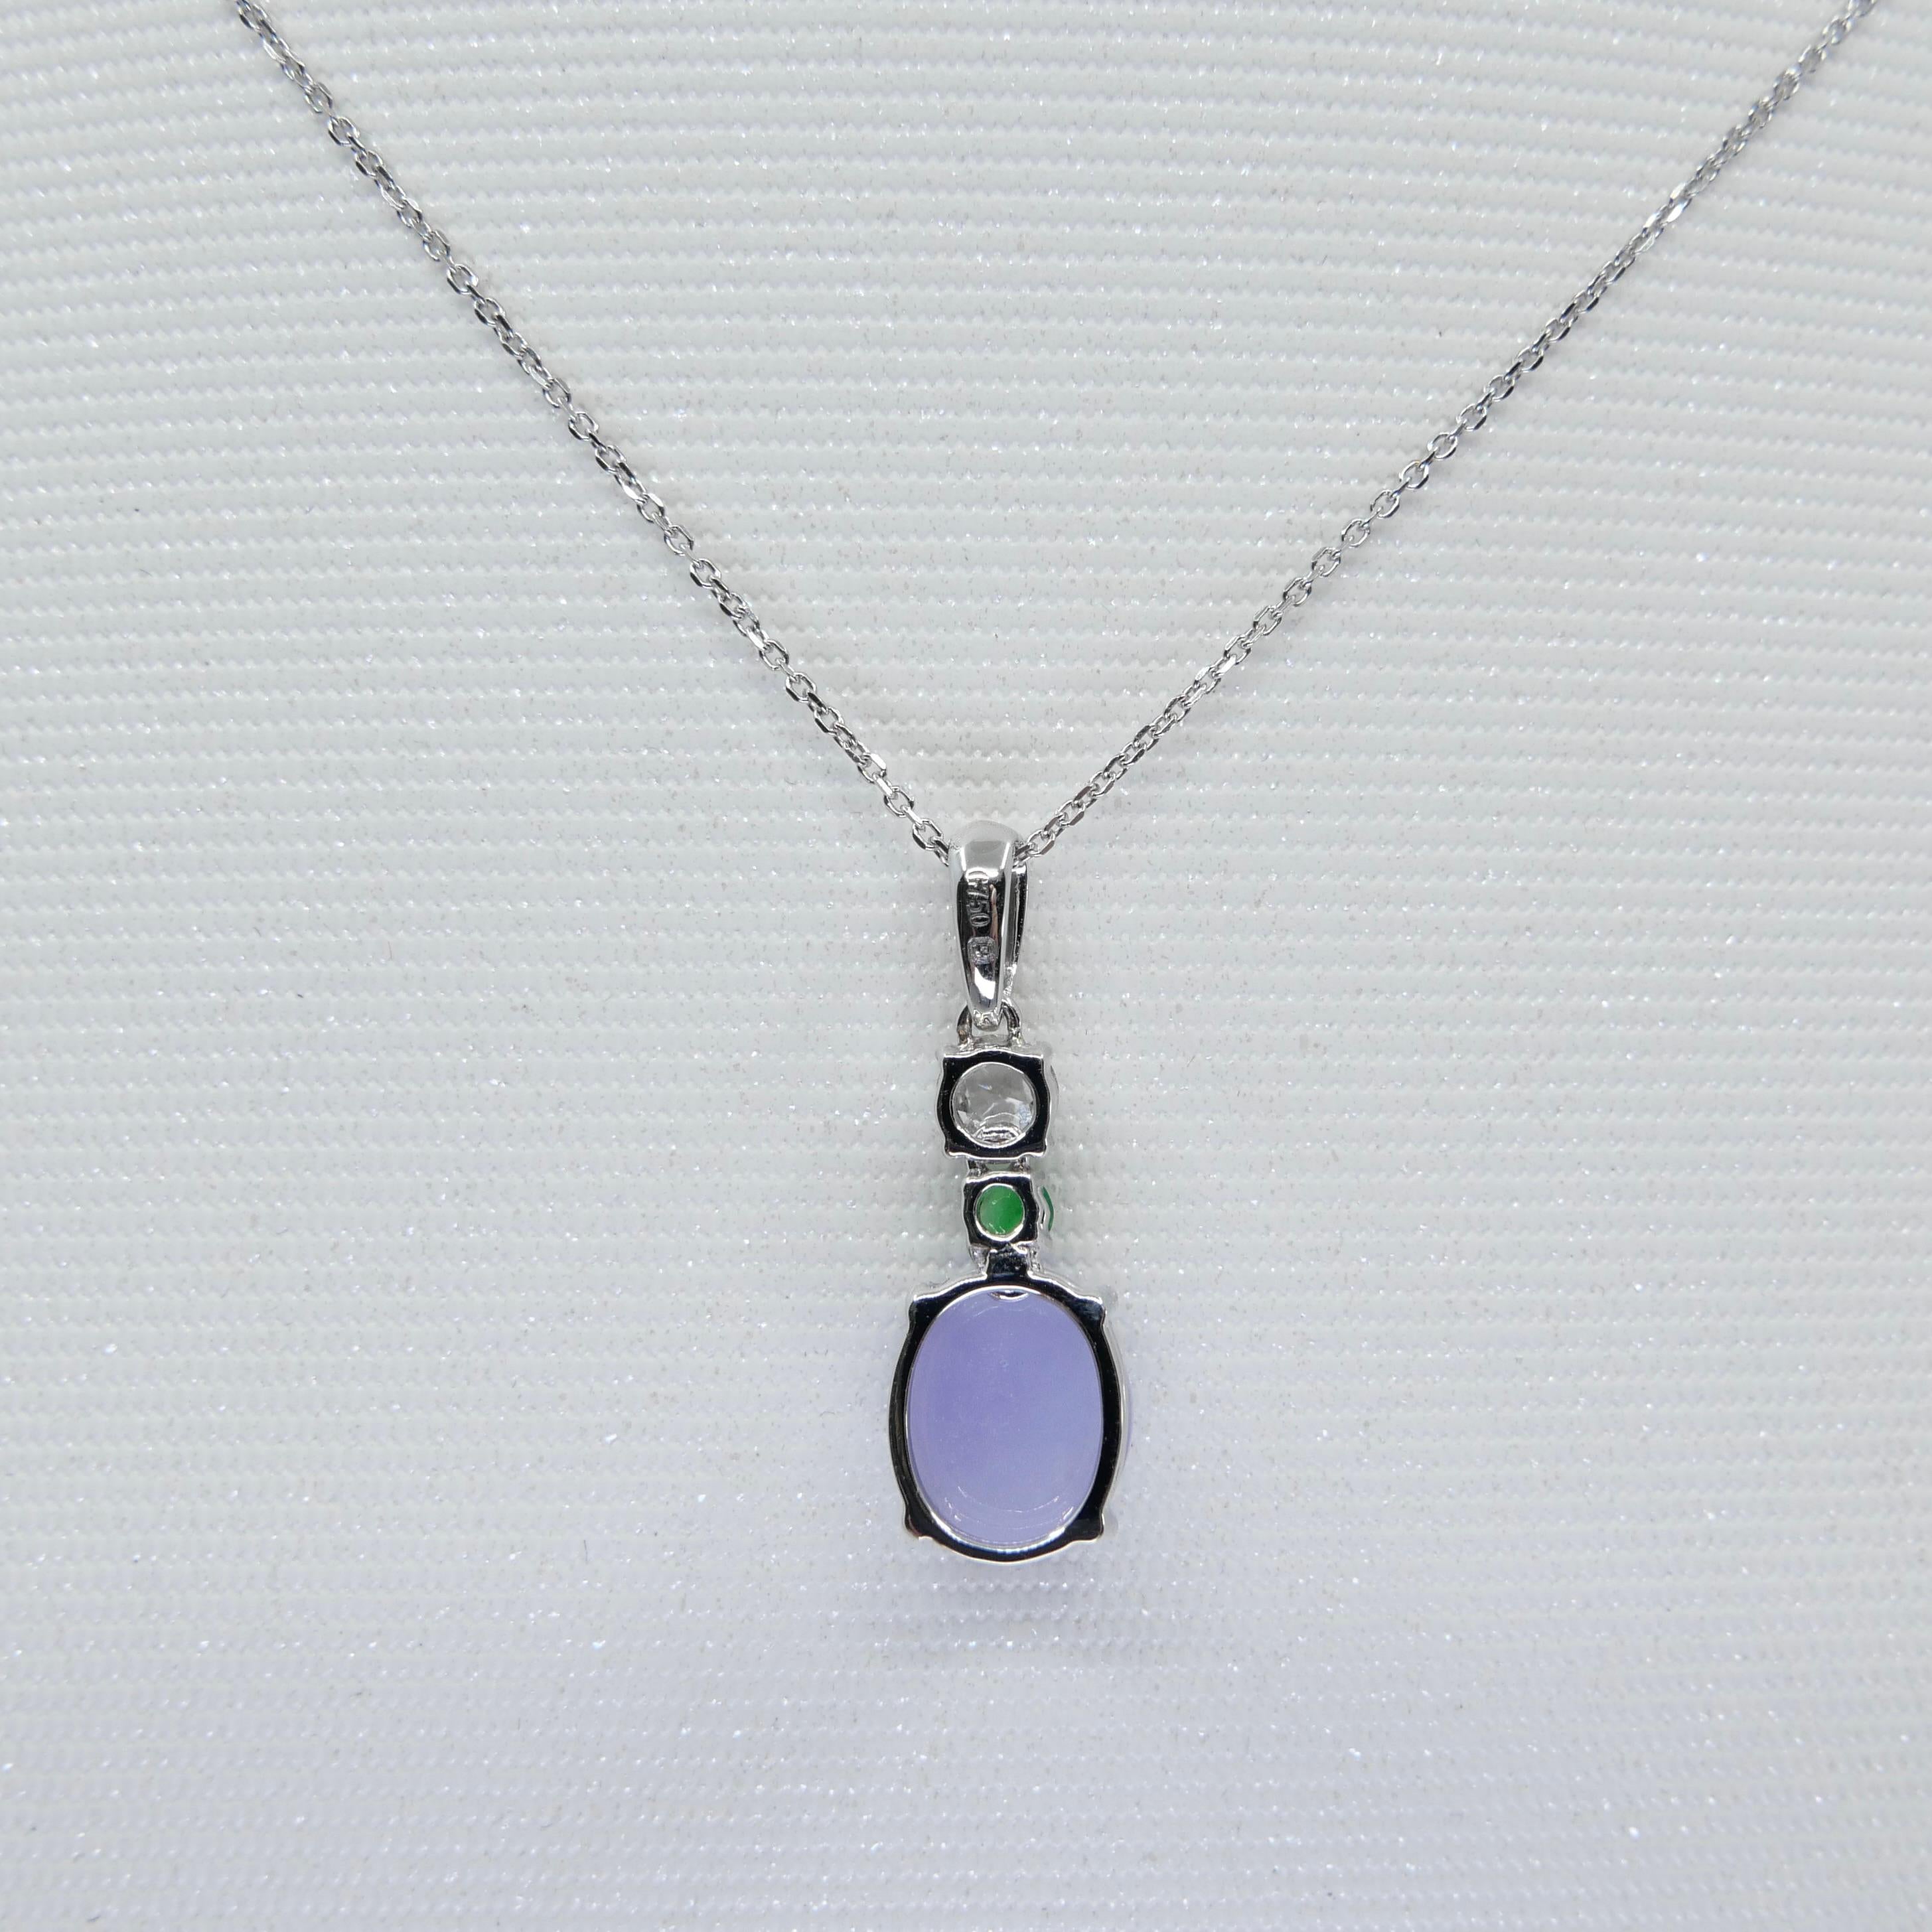 Certified 2.53cts Intense Lavender Jade & Rose Cut Diamond Drop Pendant Necklace For Sale 2